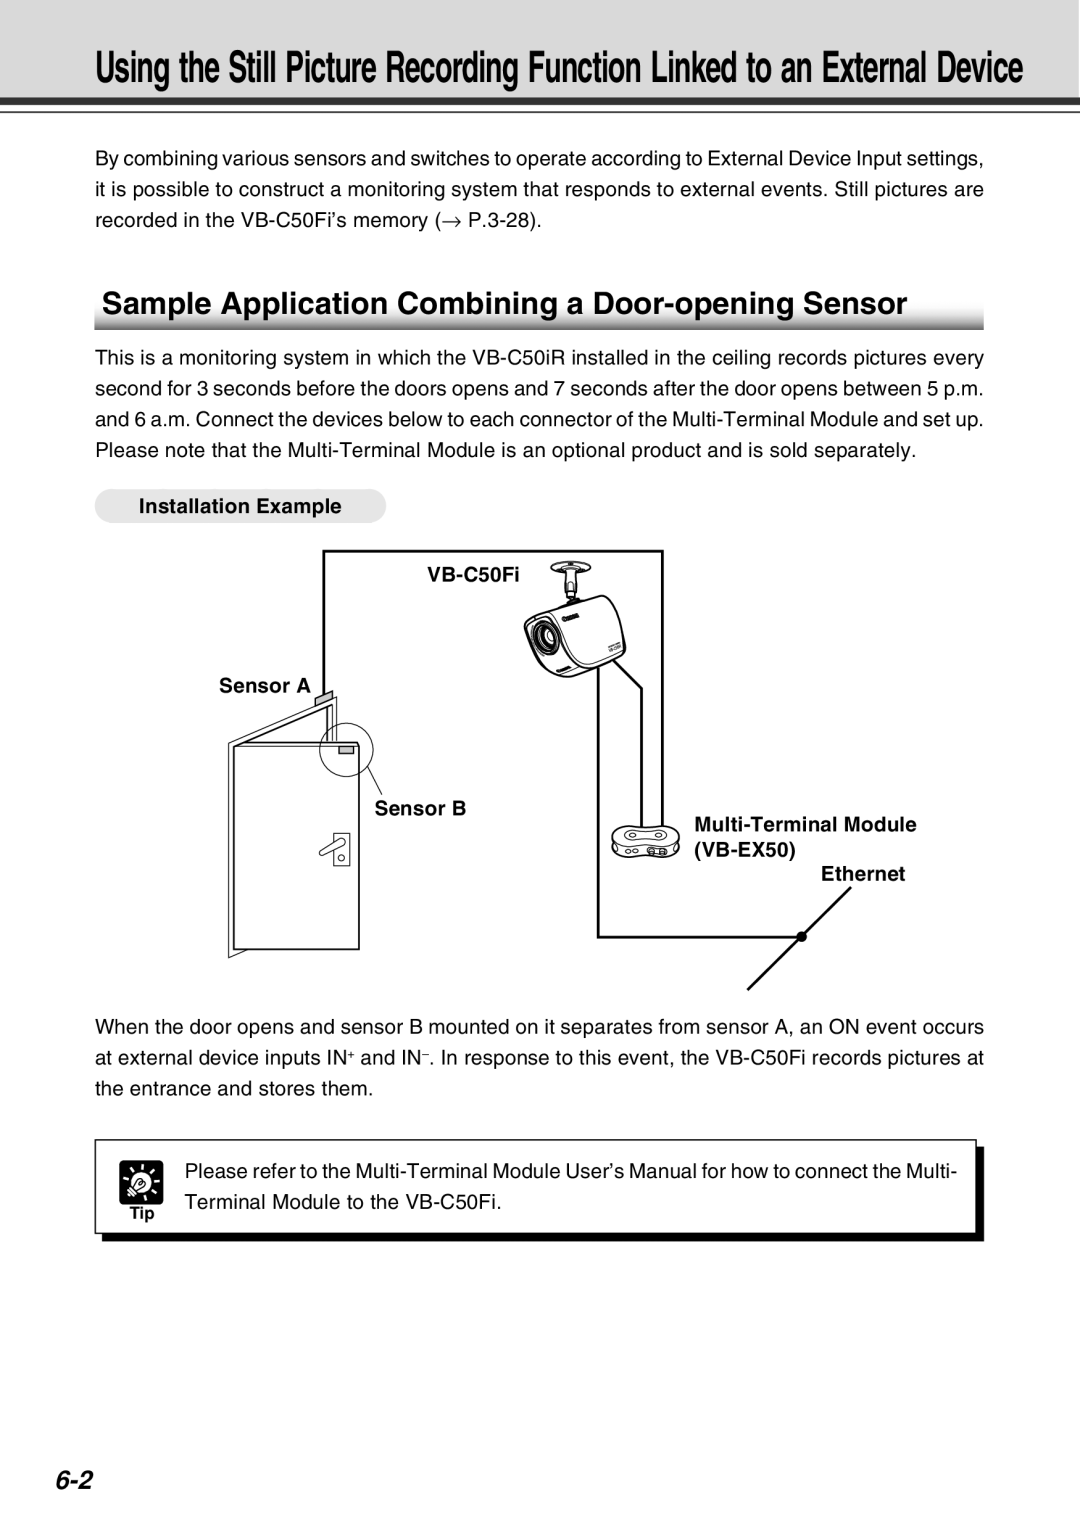 Canon Vb-C50fi Sample Application Combining a Door-openingSensor, Installation Example VB-C50Fi Sensor A Sensor B 